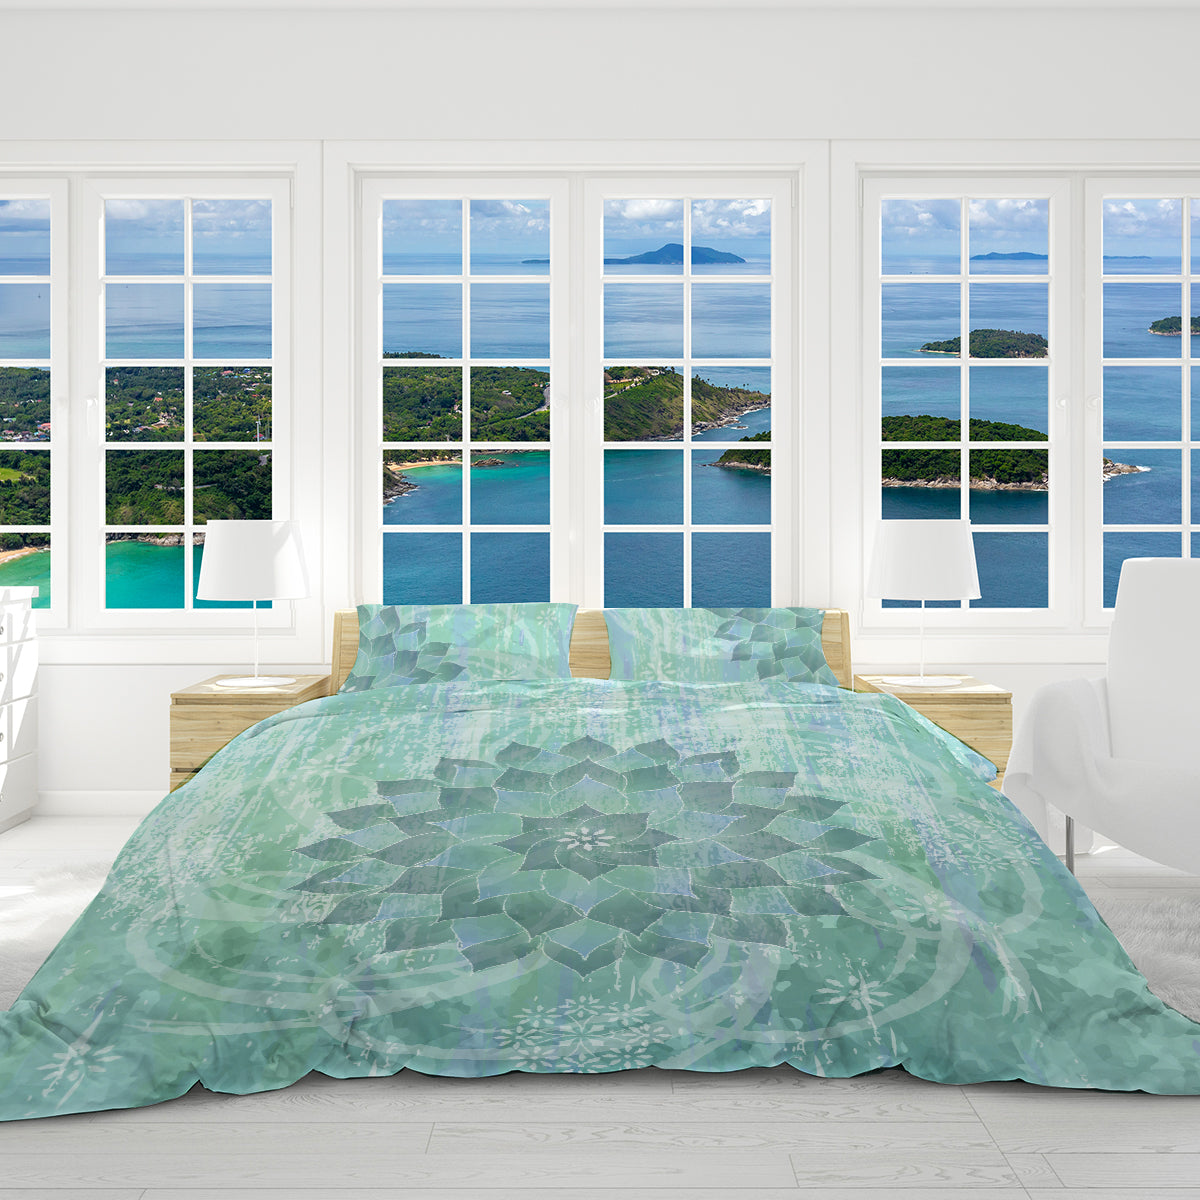 The Ocean Hues Reversible Bedcover Set